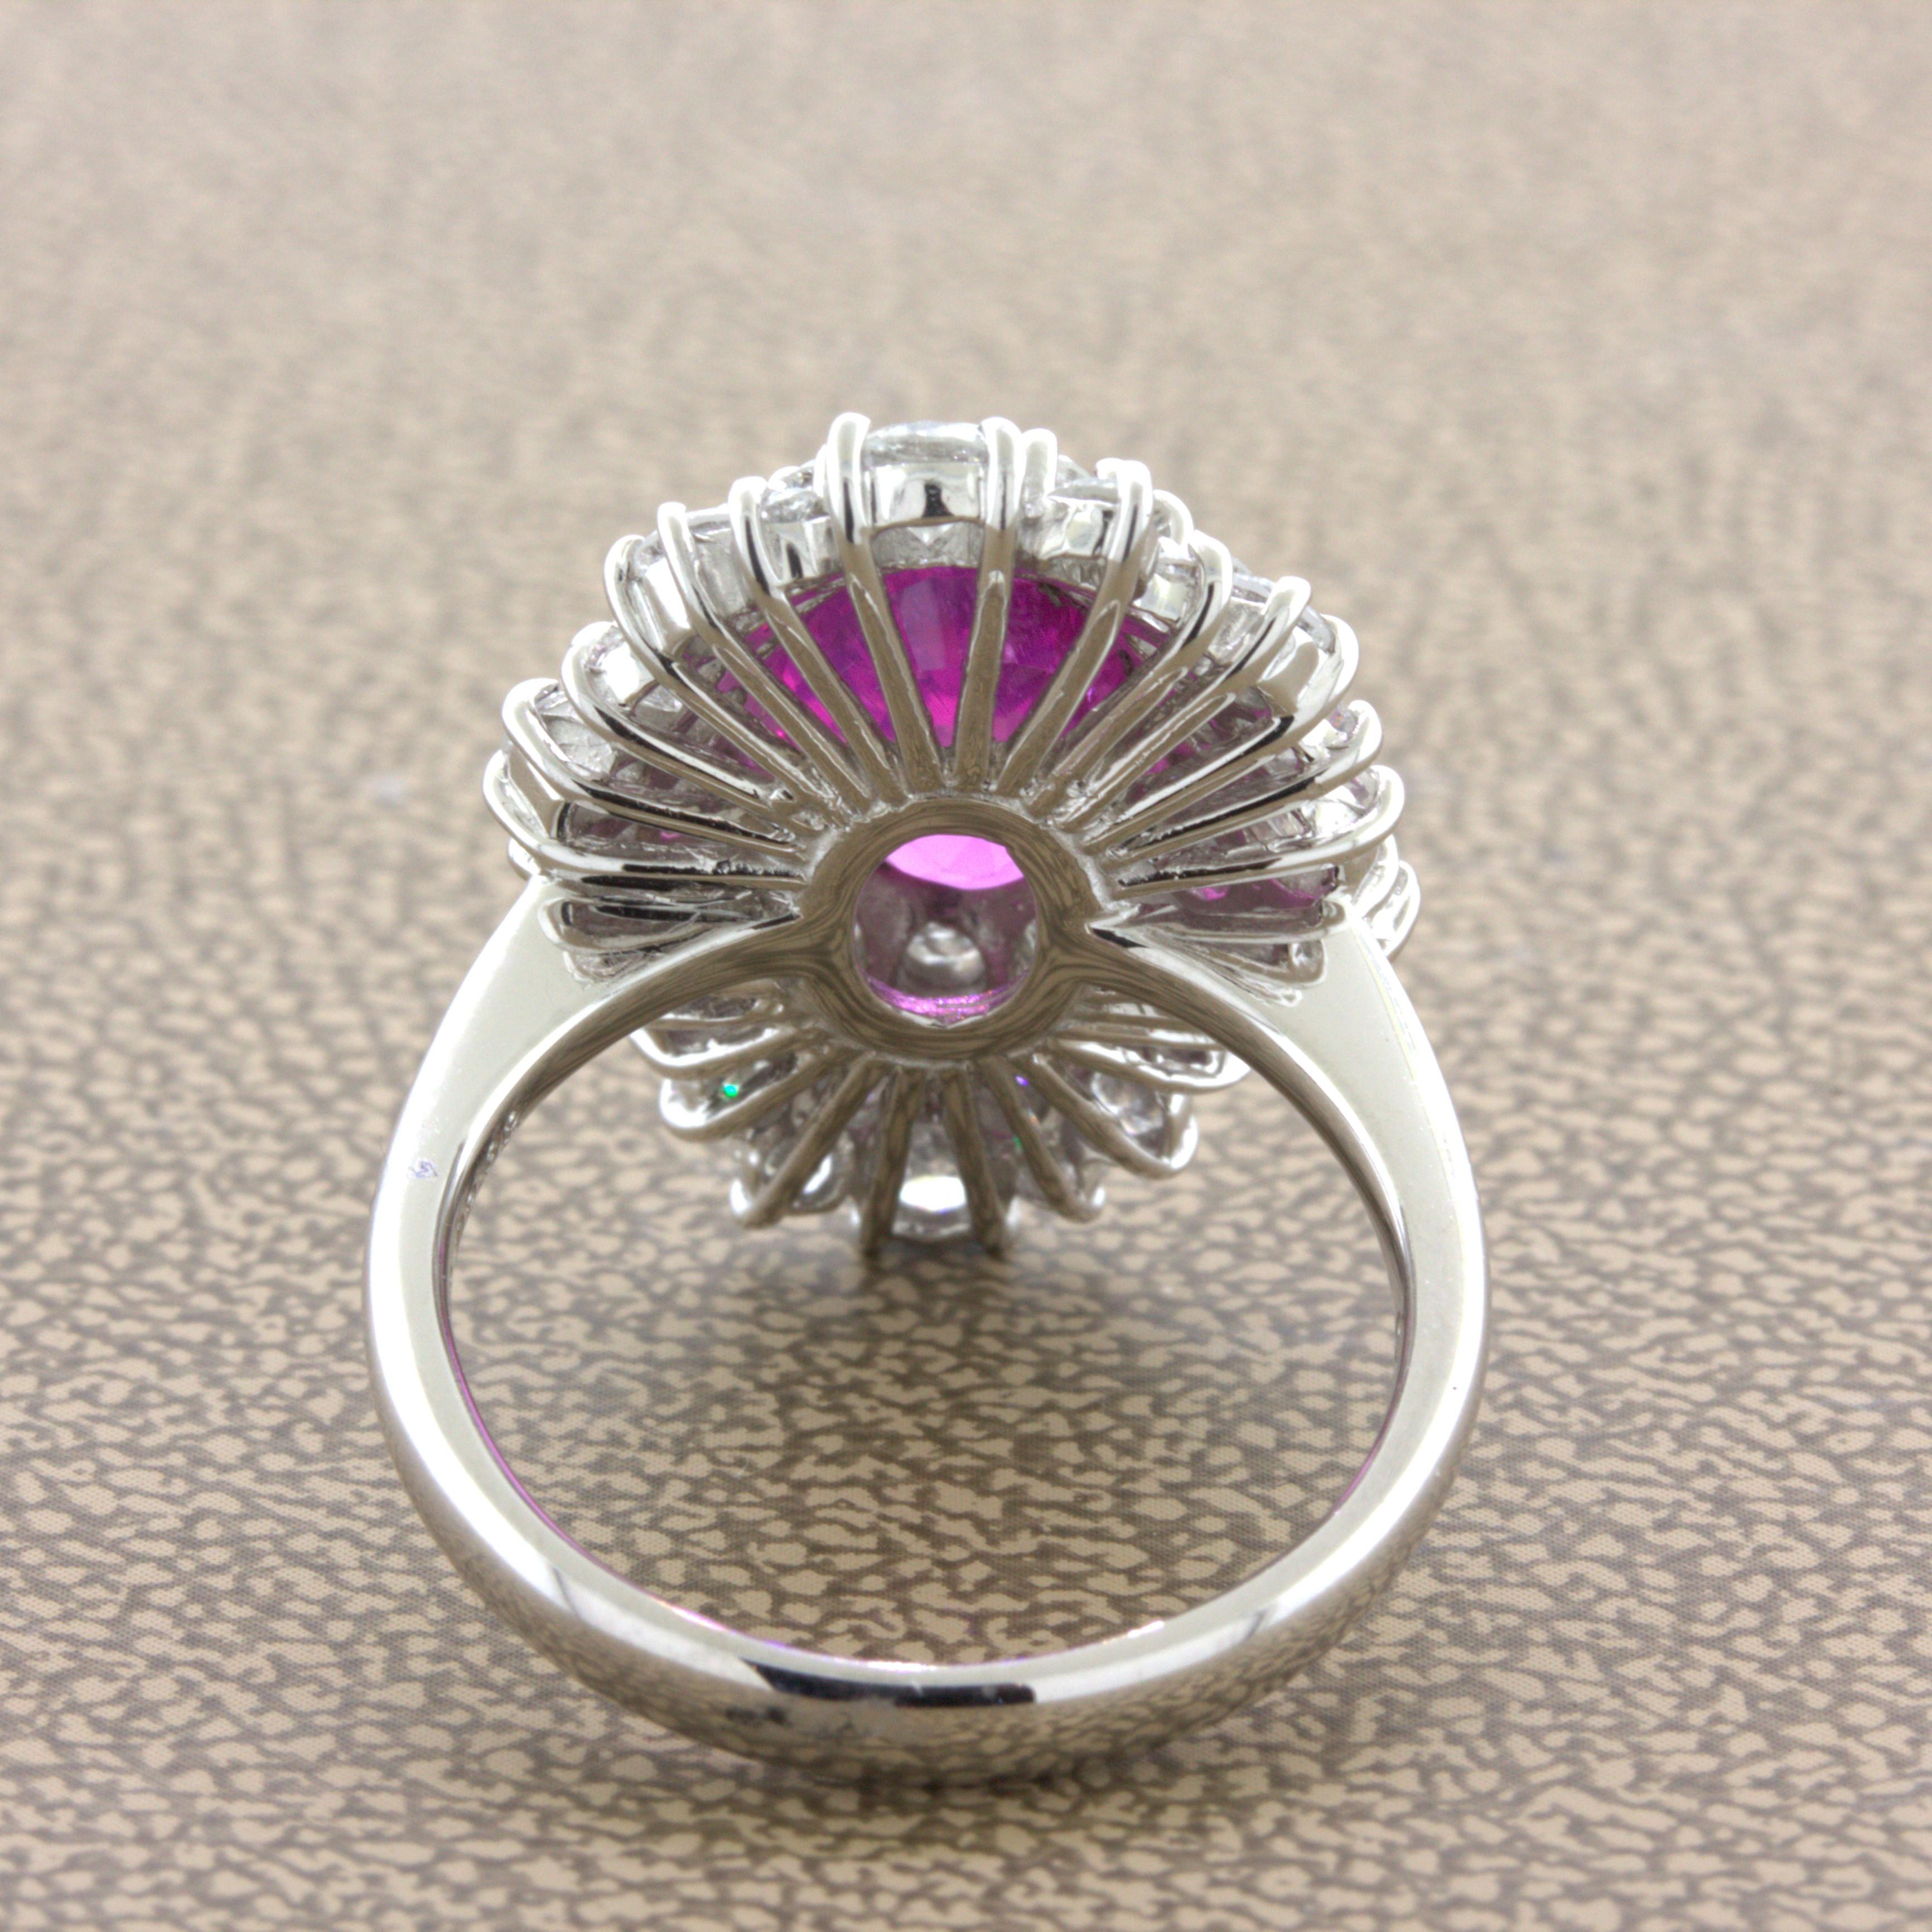 4.25 Carat “Barbie Pink” Sapphire Diamond Platinum Ring, GIA Certified For Sale 1